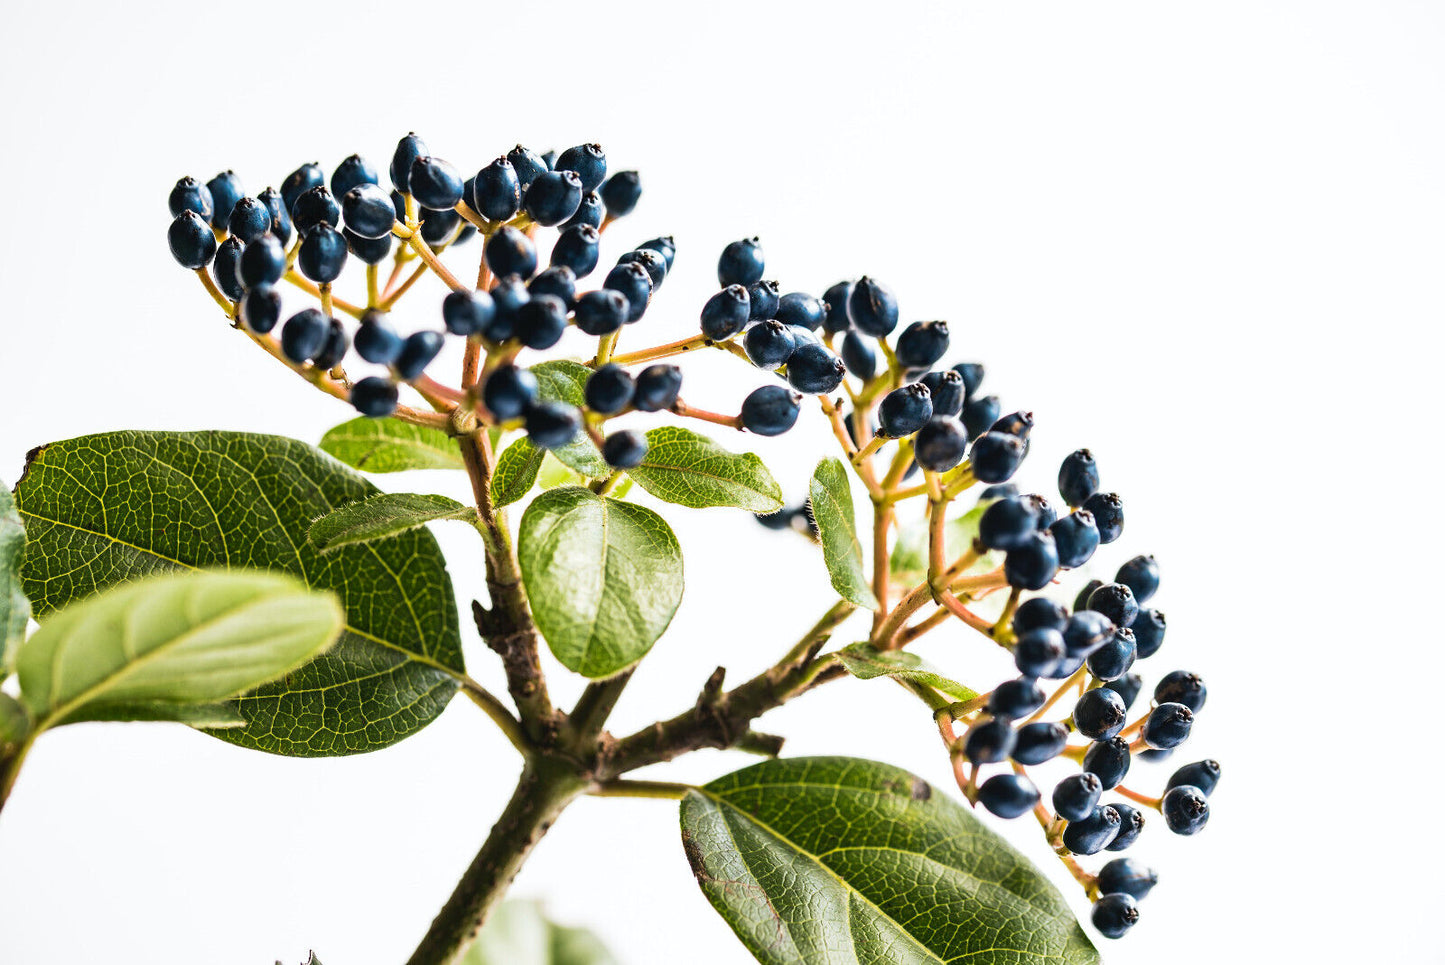 Hundredfold Wild Raisin 10 Seeds - Viburnum nudum cassinoides, Witherod Viburnum Blue Haw, Edible Berries and Nice Fall Color